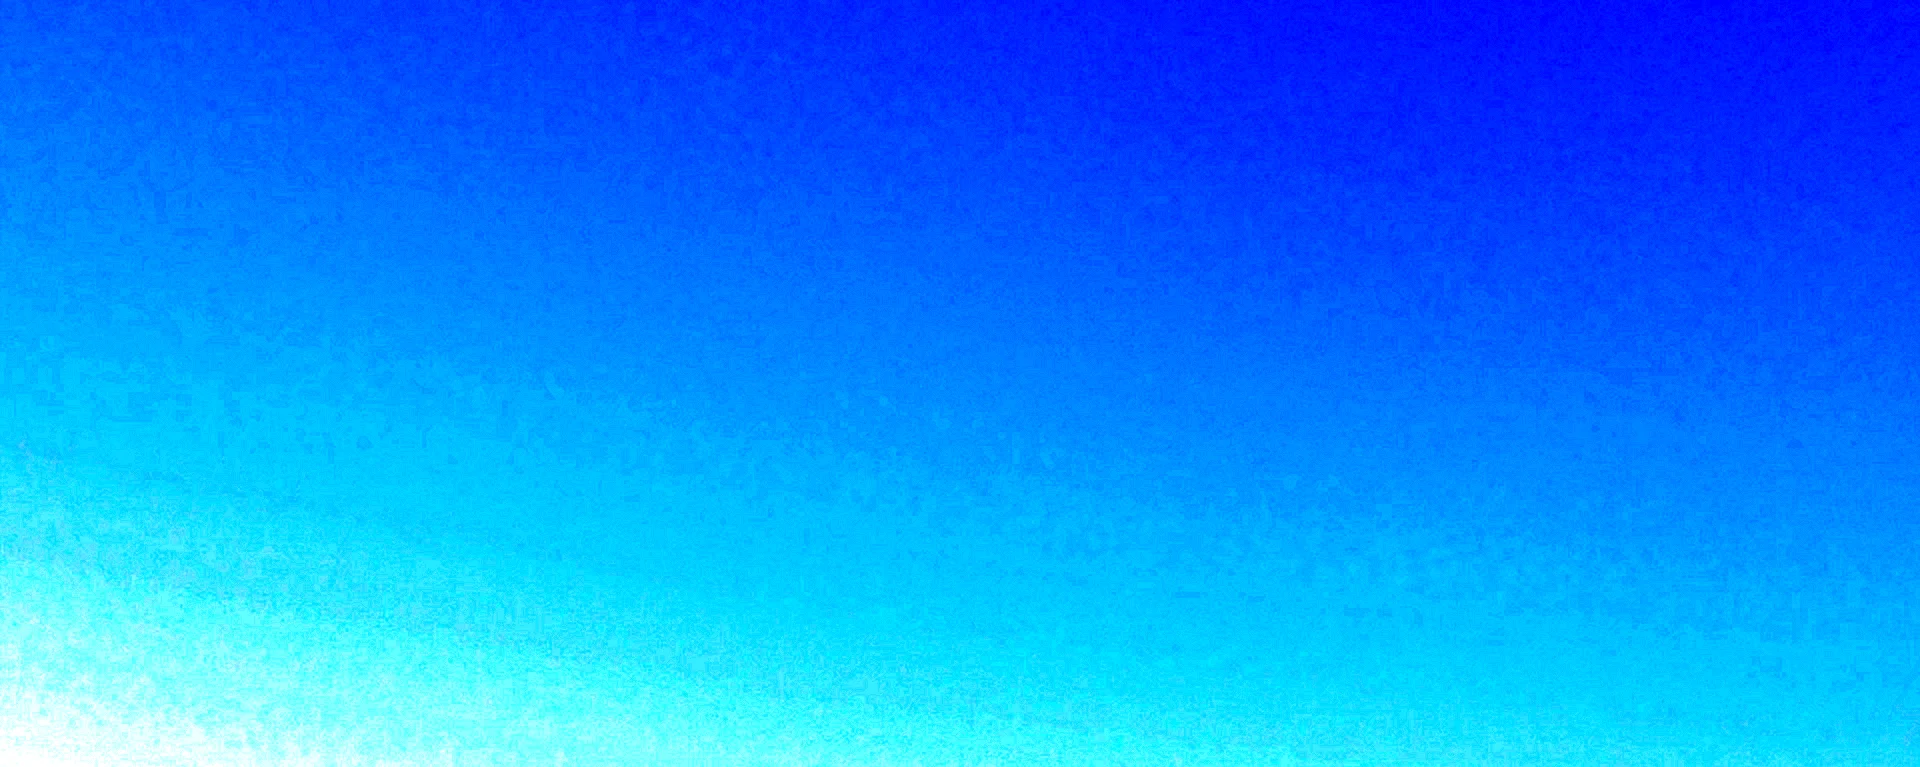 Голубое безоблачное небо